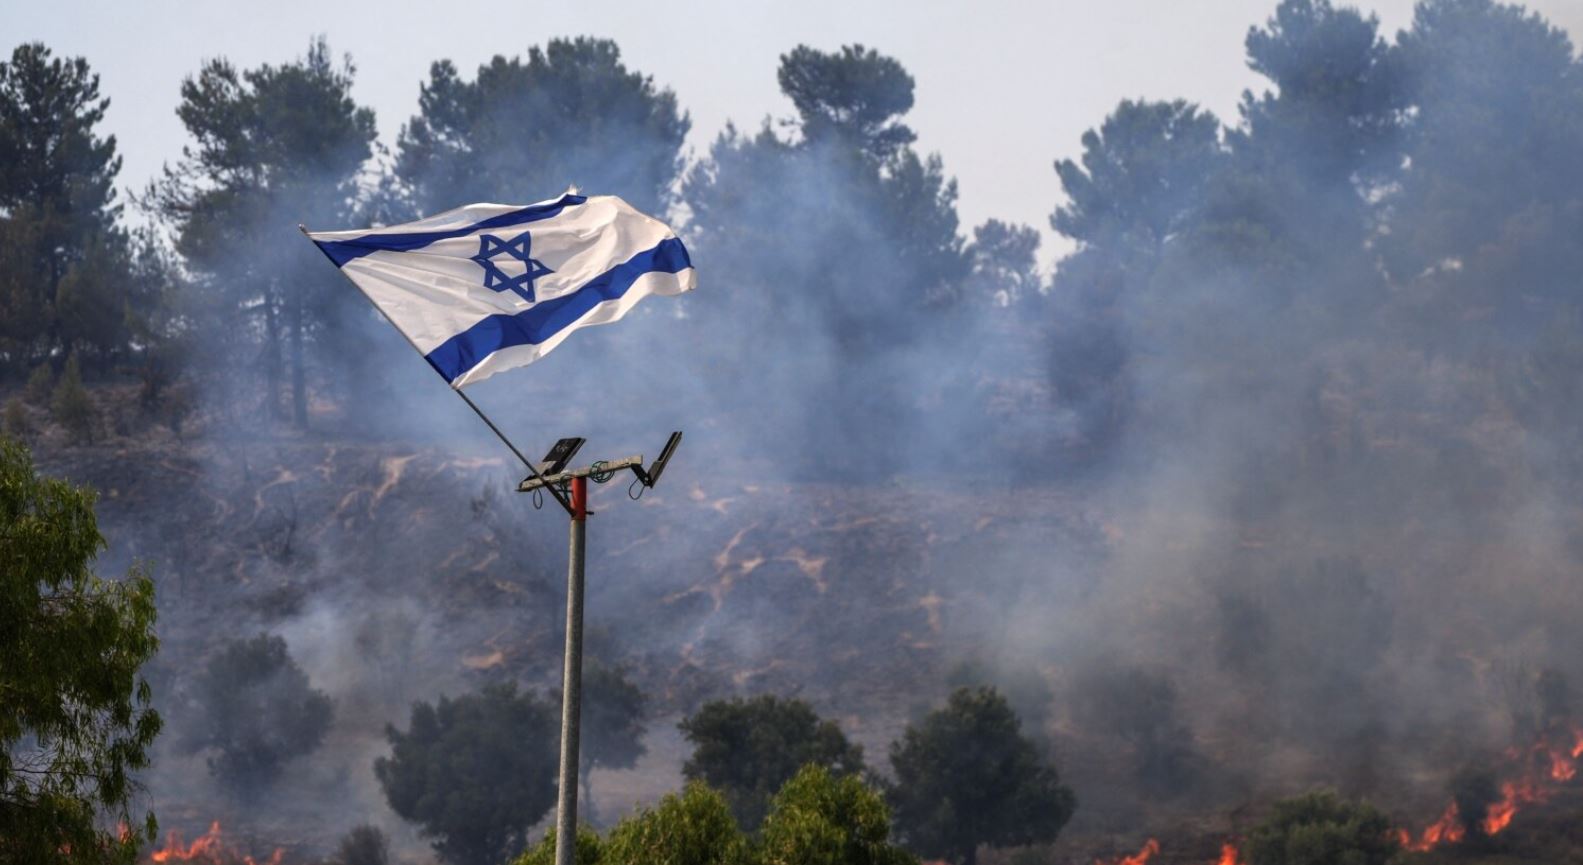 cnn tregon prapaskenat shba mbeshtetje per izraelin ne rast lufte totale me hezbollahun